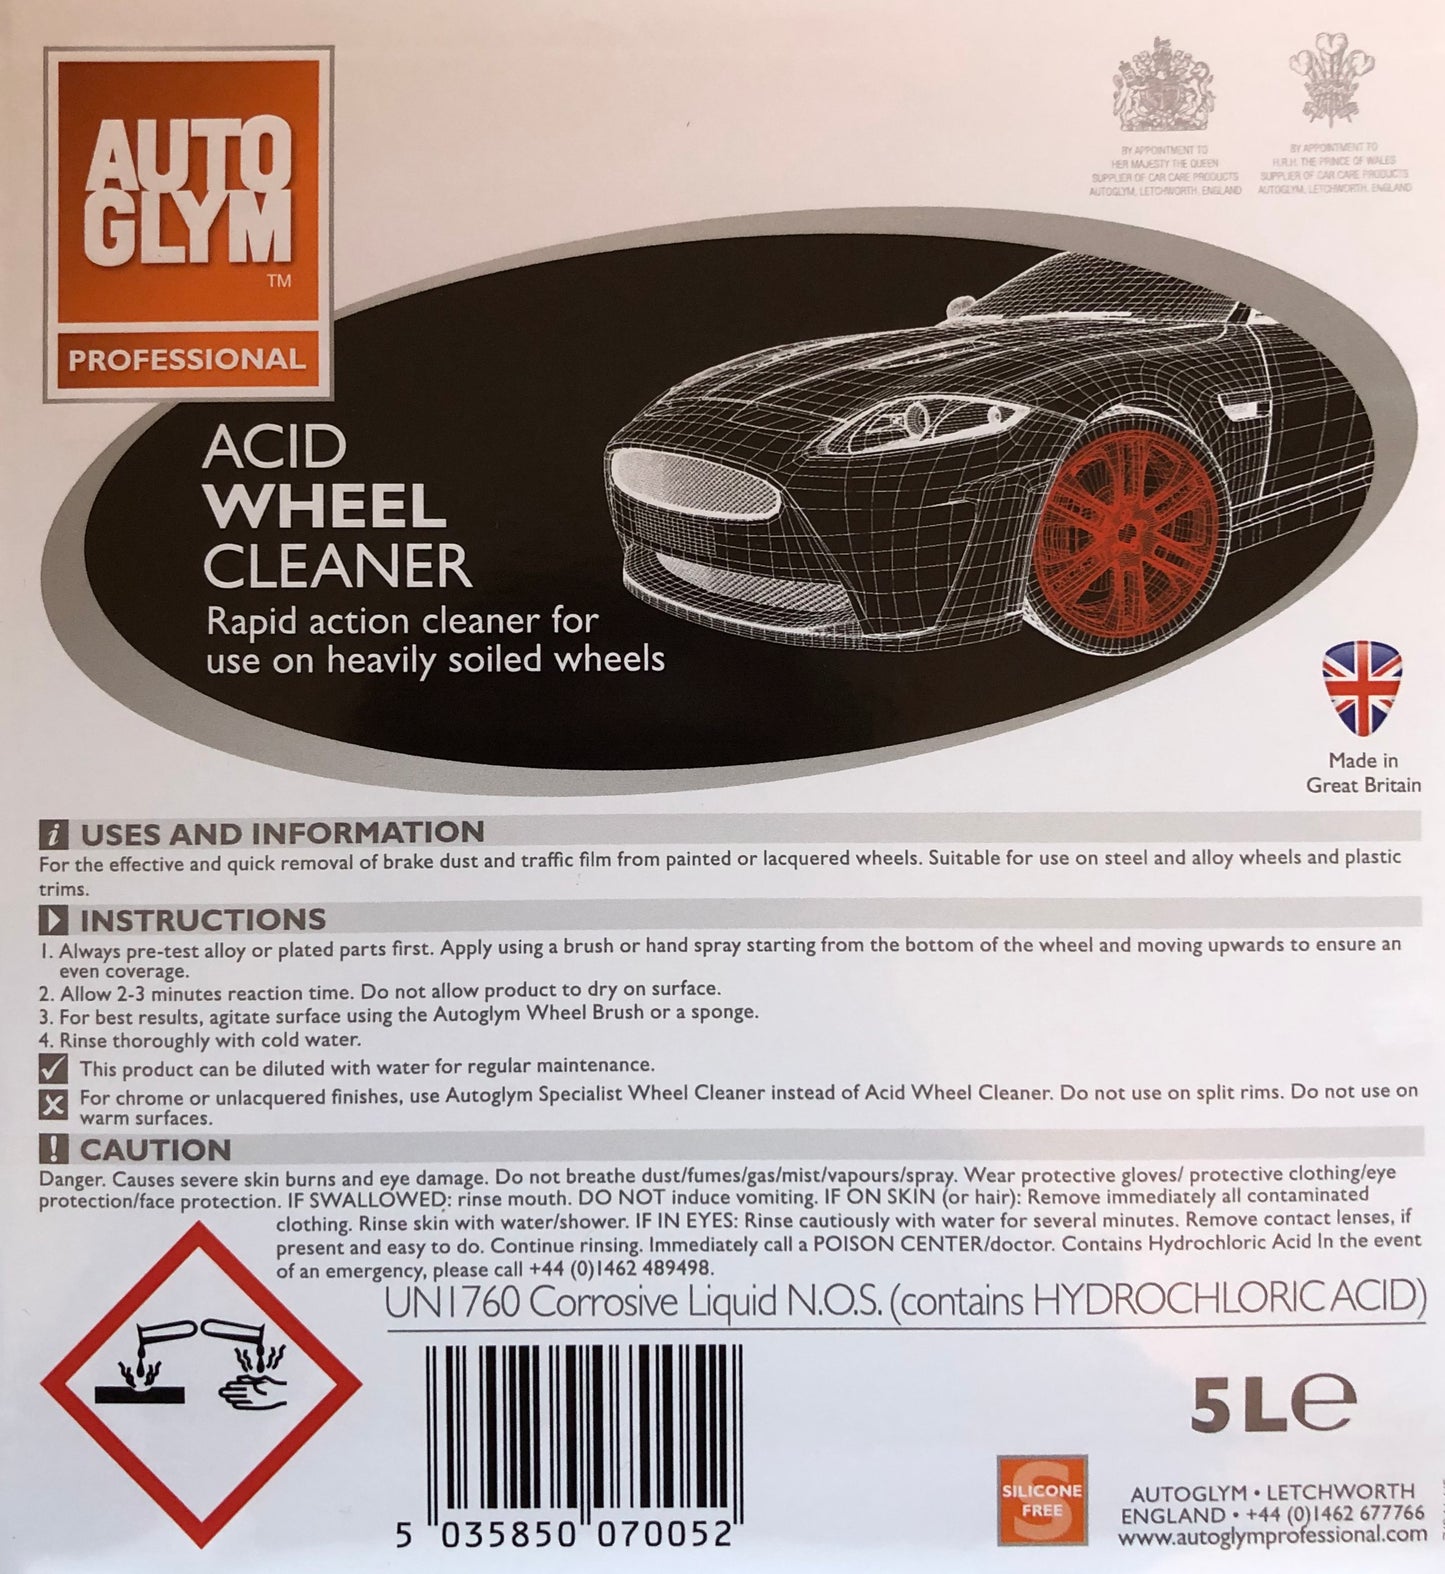 Autoglym Acid Wheel Cleaner. Rapid action, acid-based wheel cleaner.